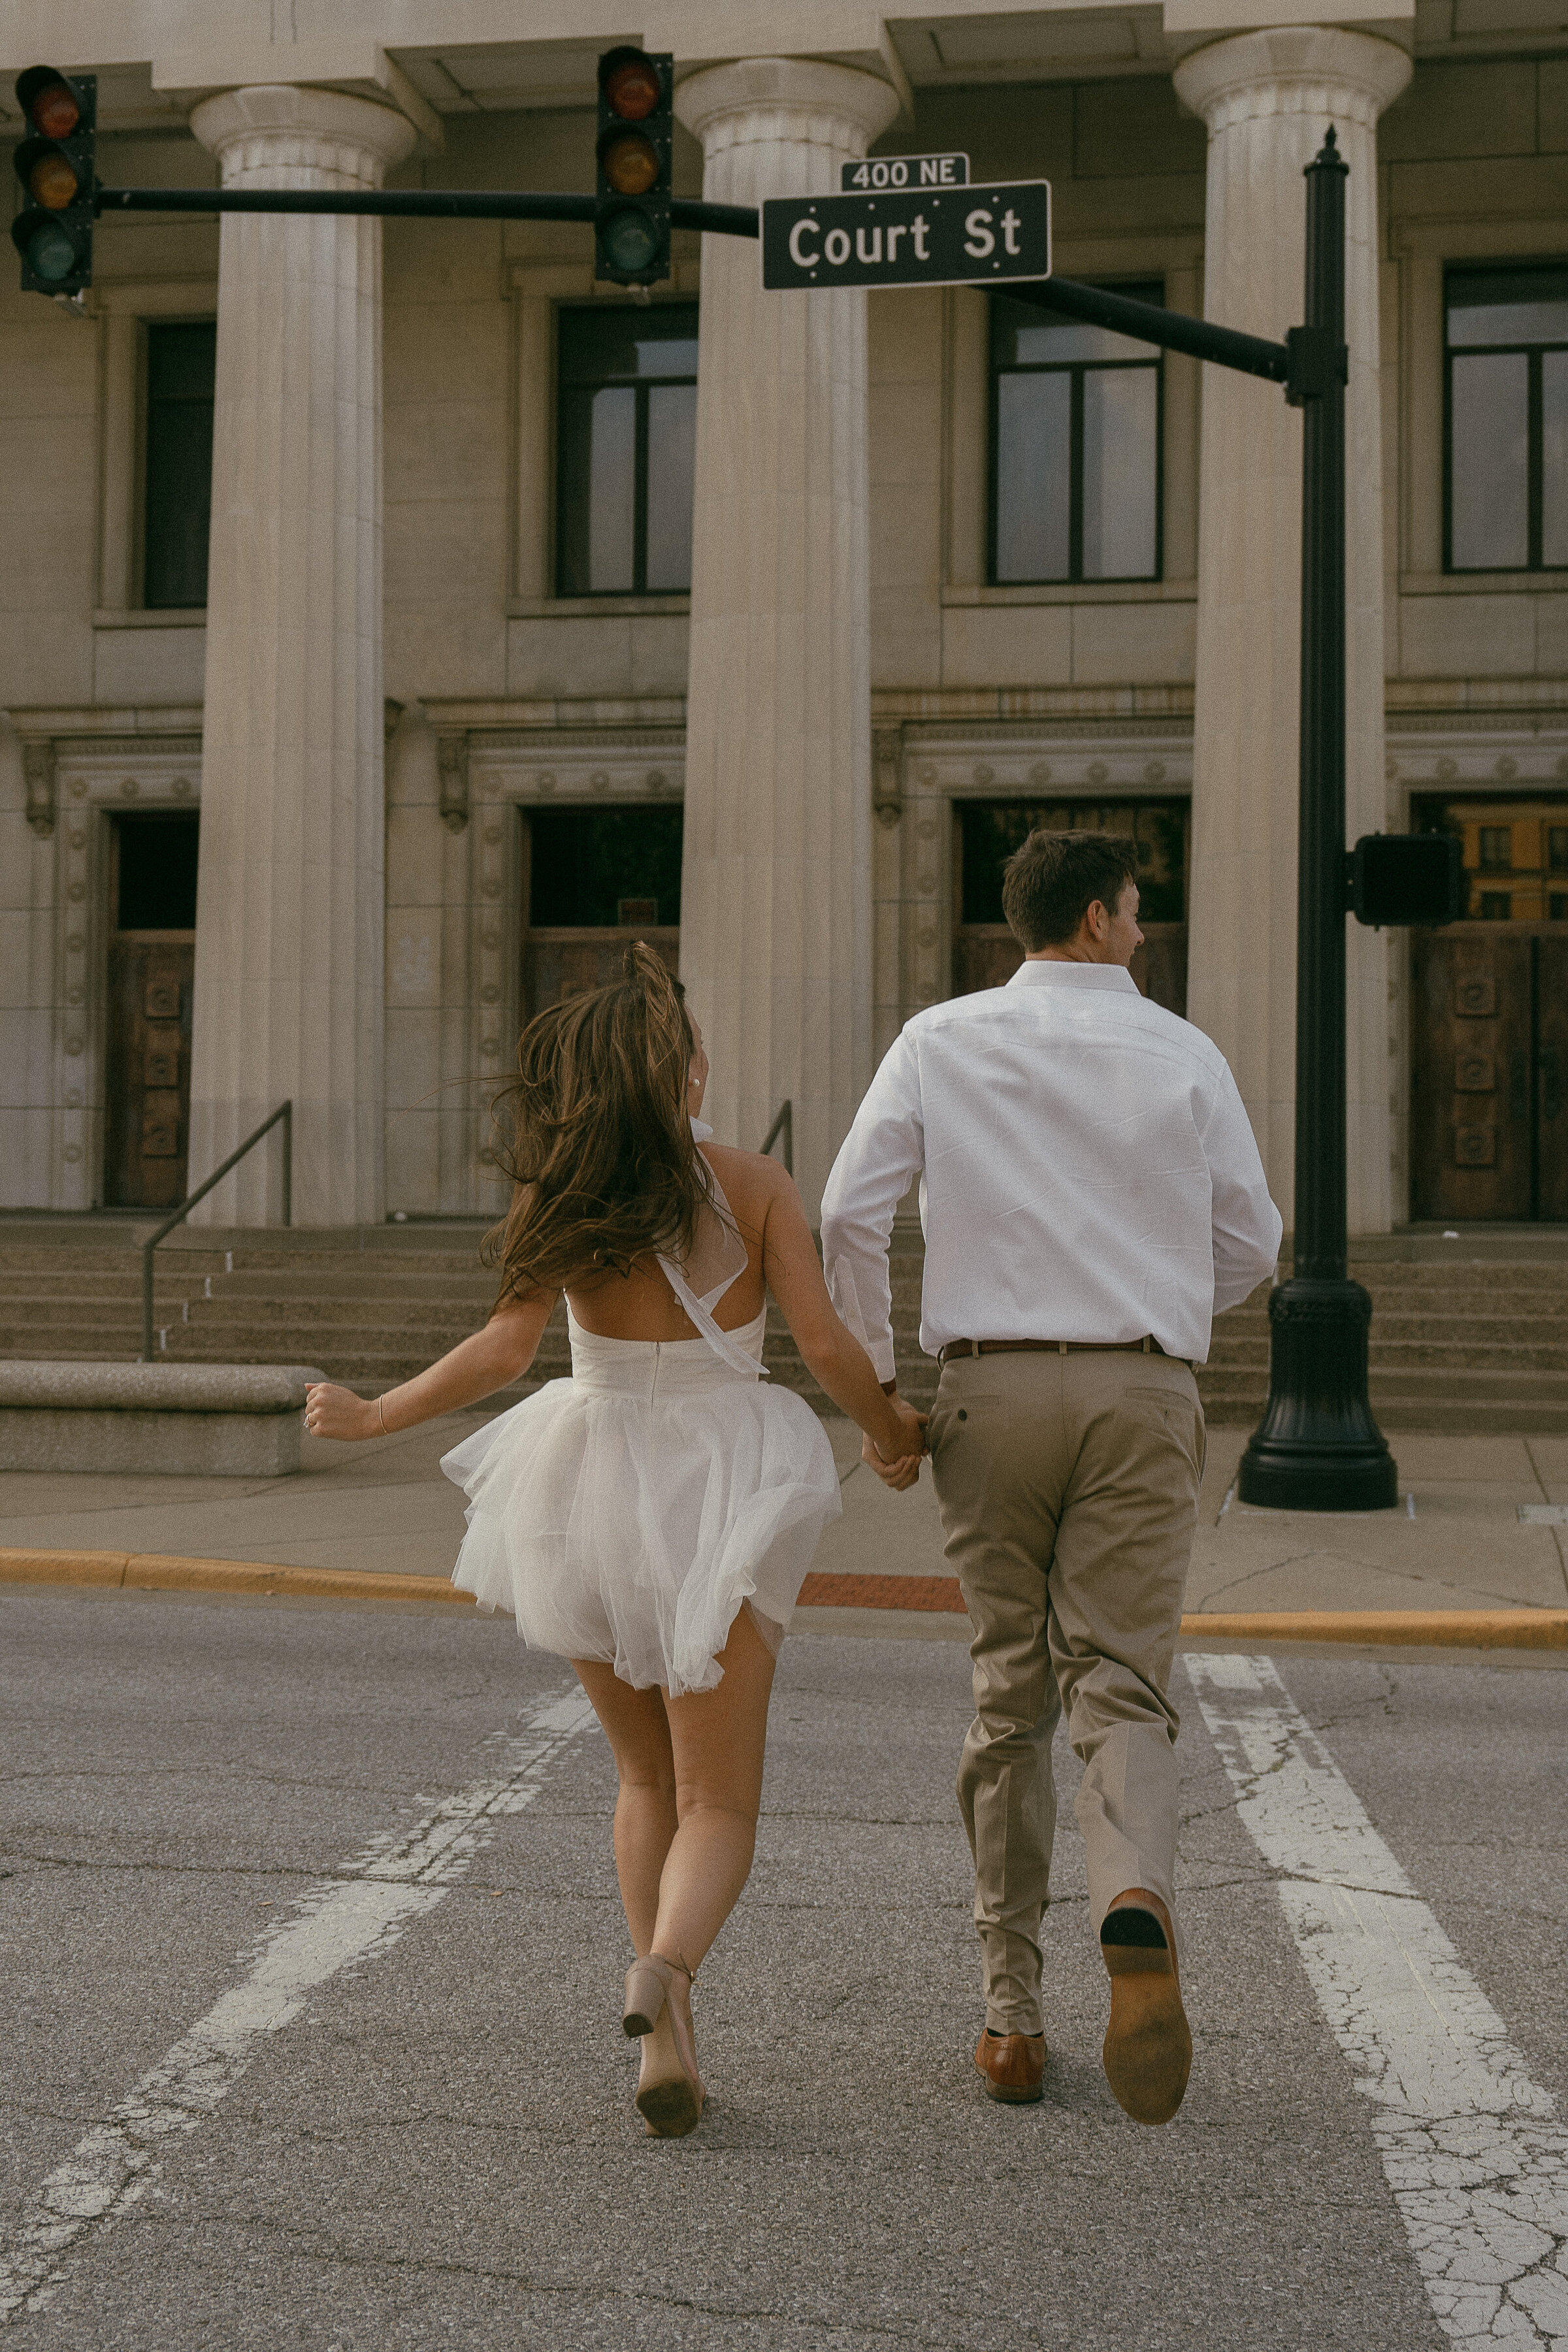 Joyful couple running across the street in casual wedding attire.